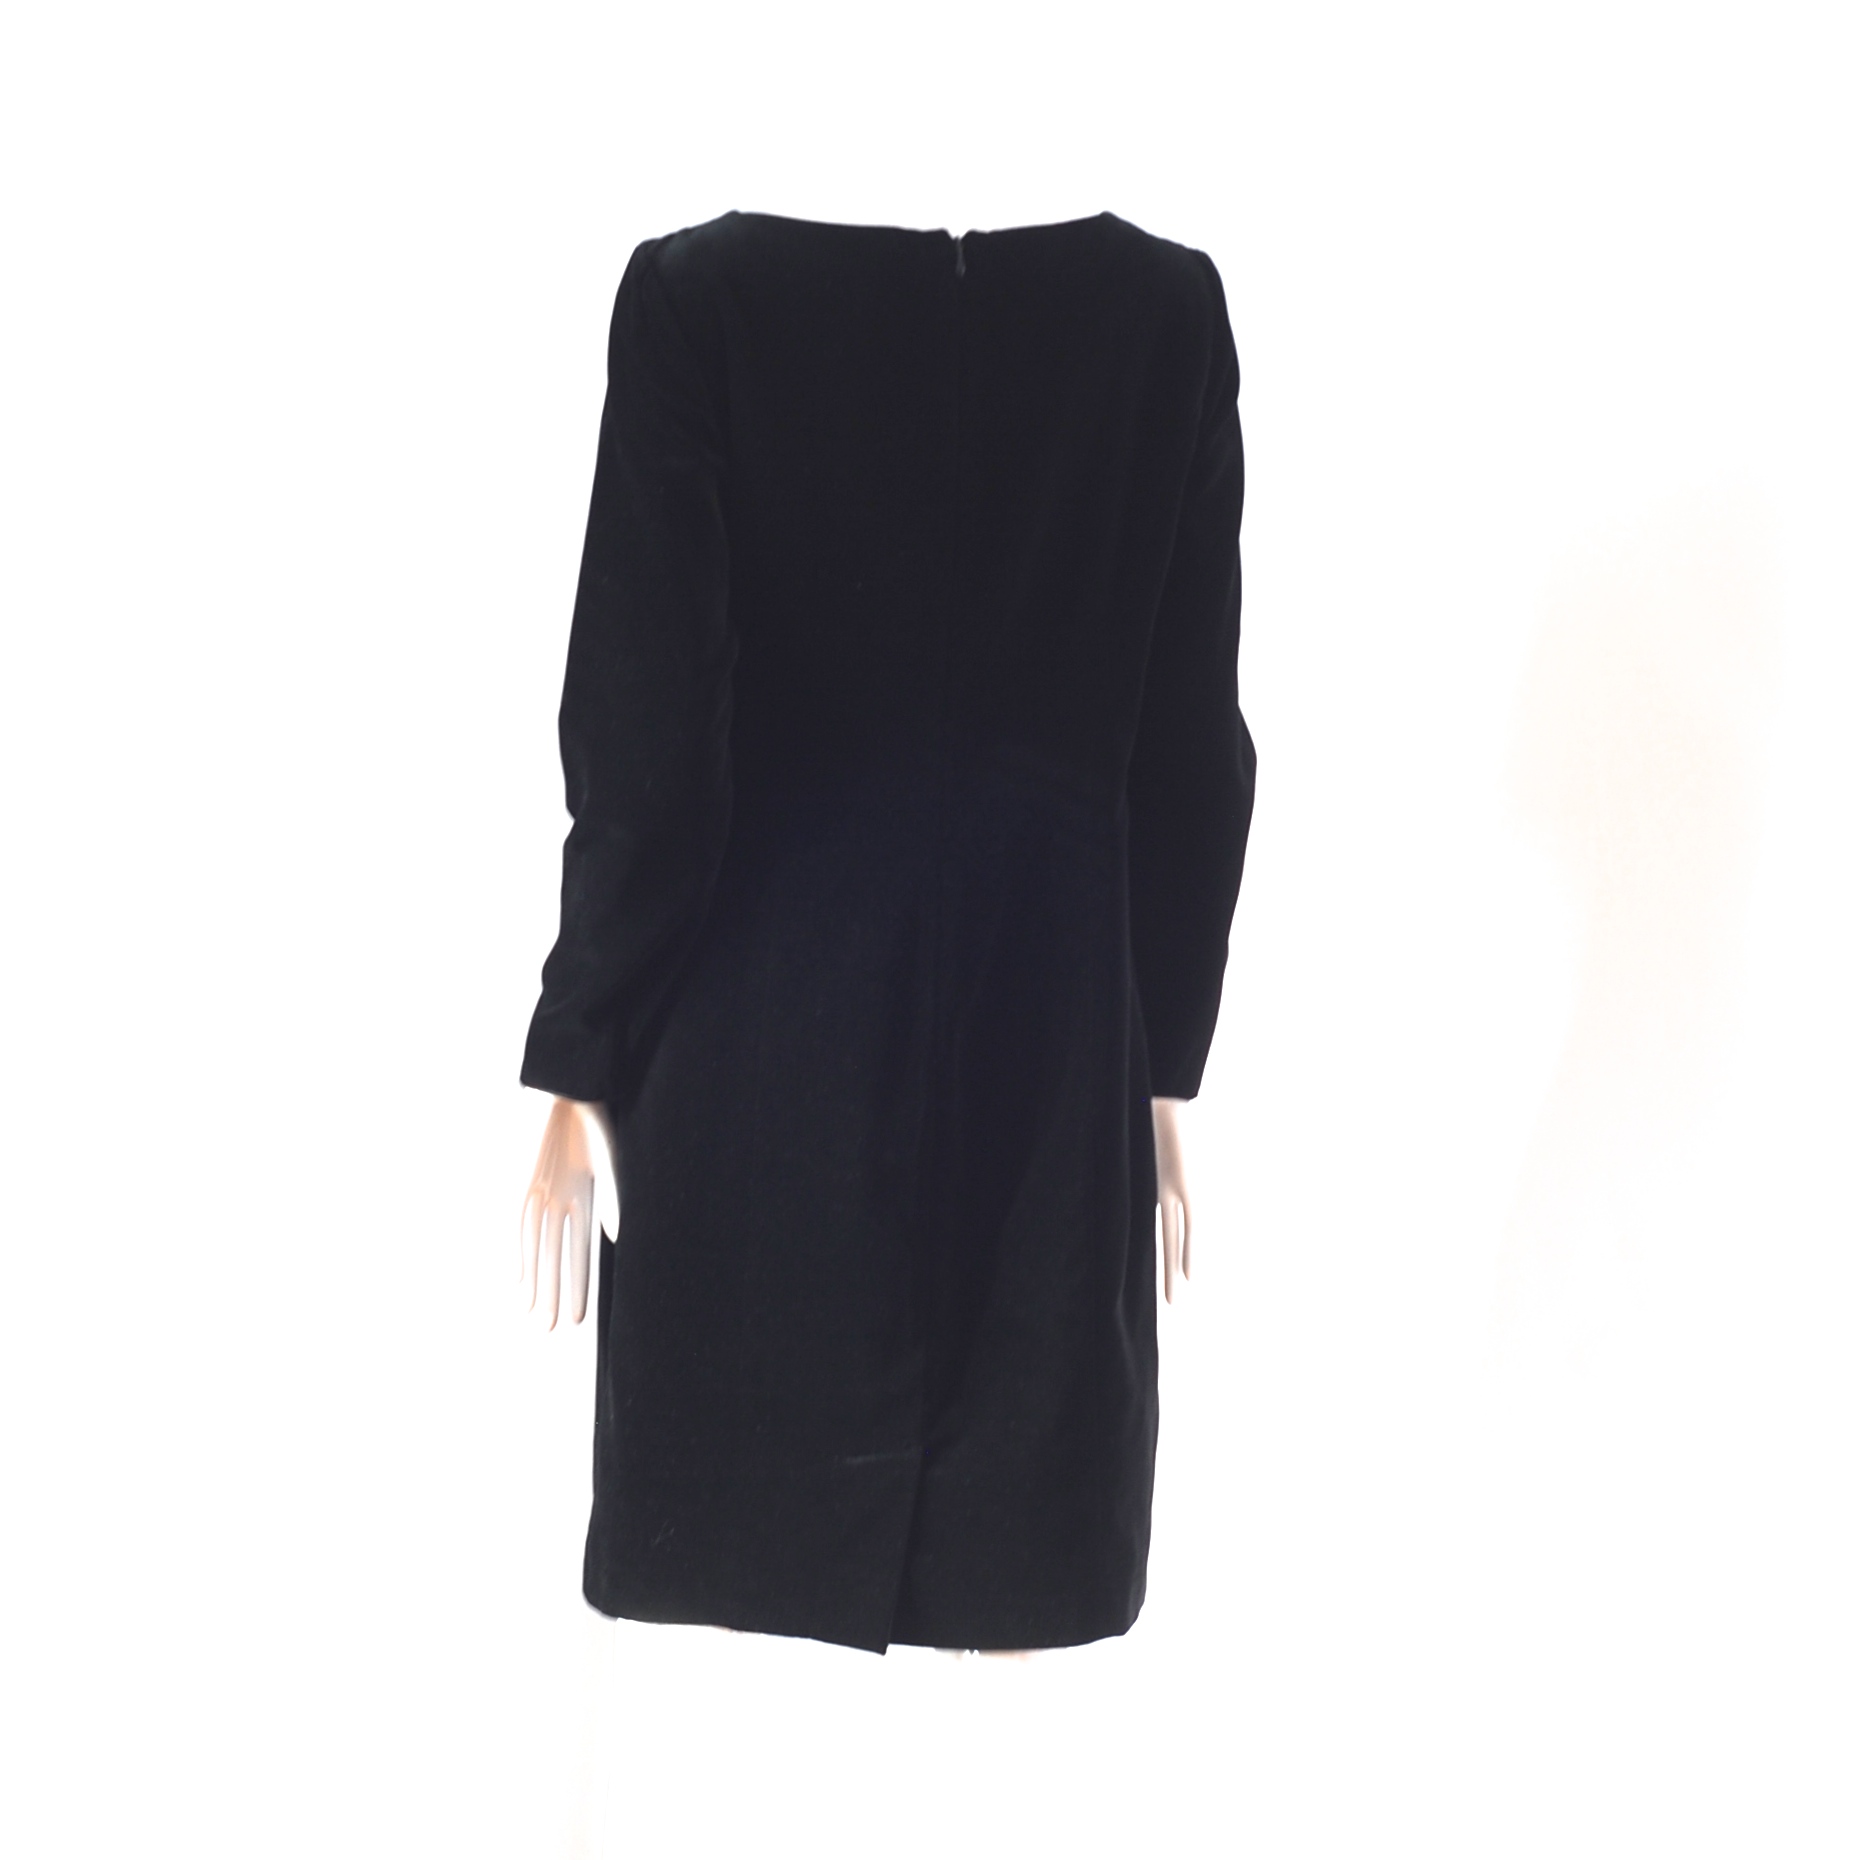 Laura Ashley Chic Black Velvet Dress With Embroidered Neckline – UK ...